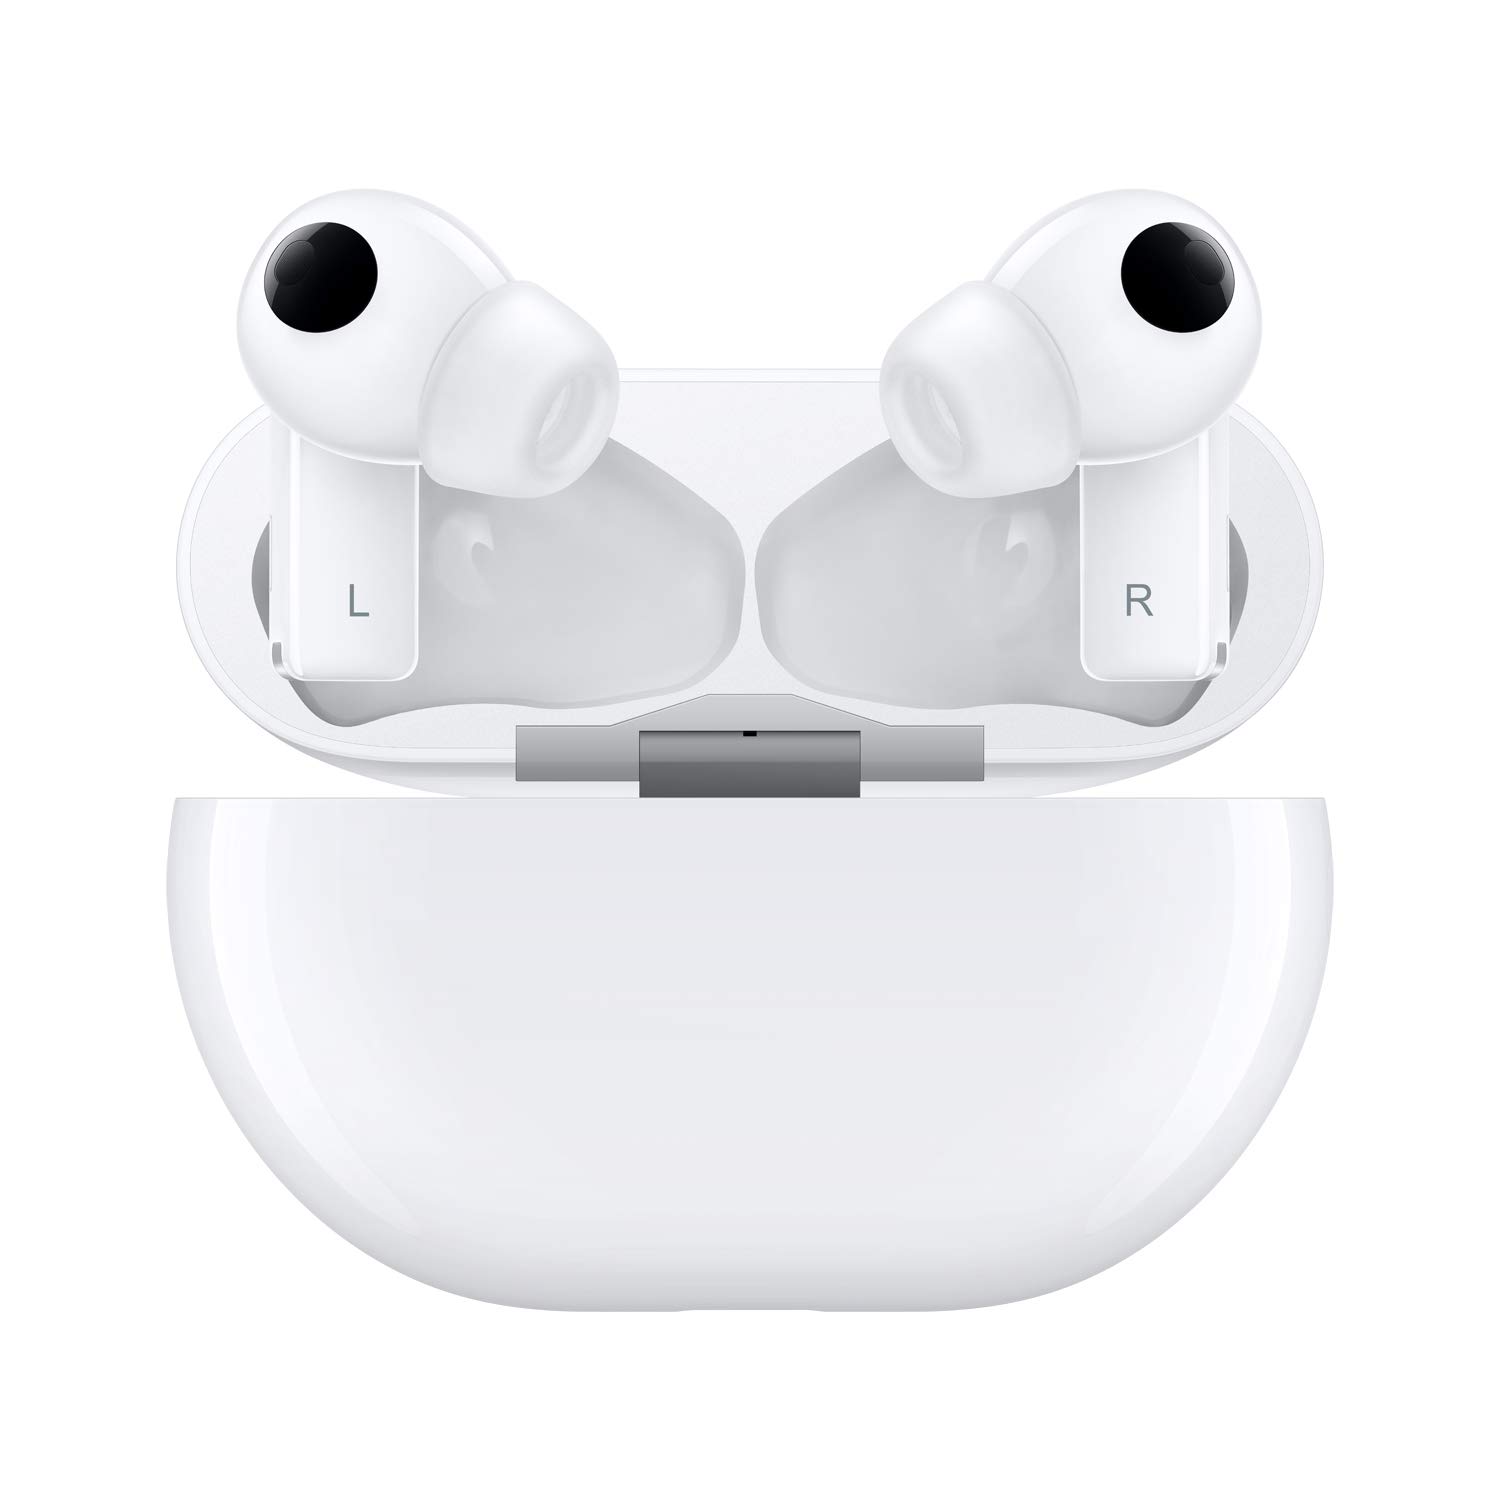 Huawei Freebuds Pro Active Noise Cancellation Earbuds MermaidTWS - Ceramic White